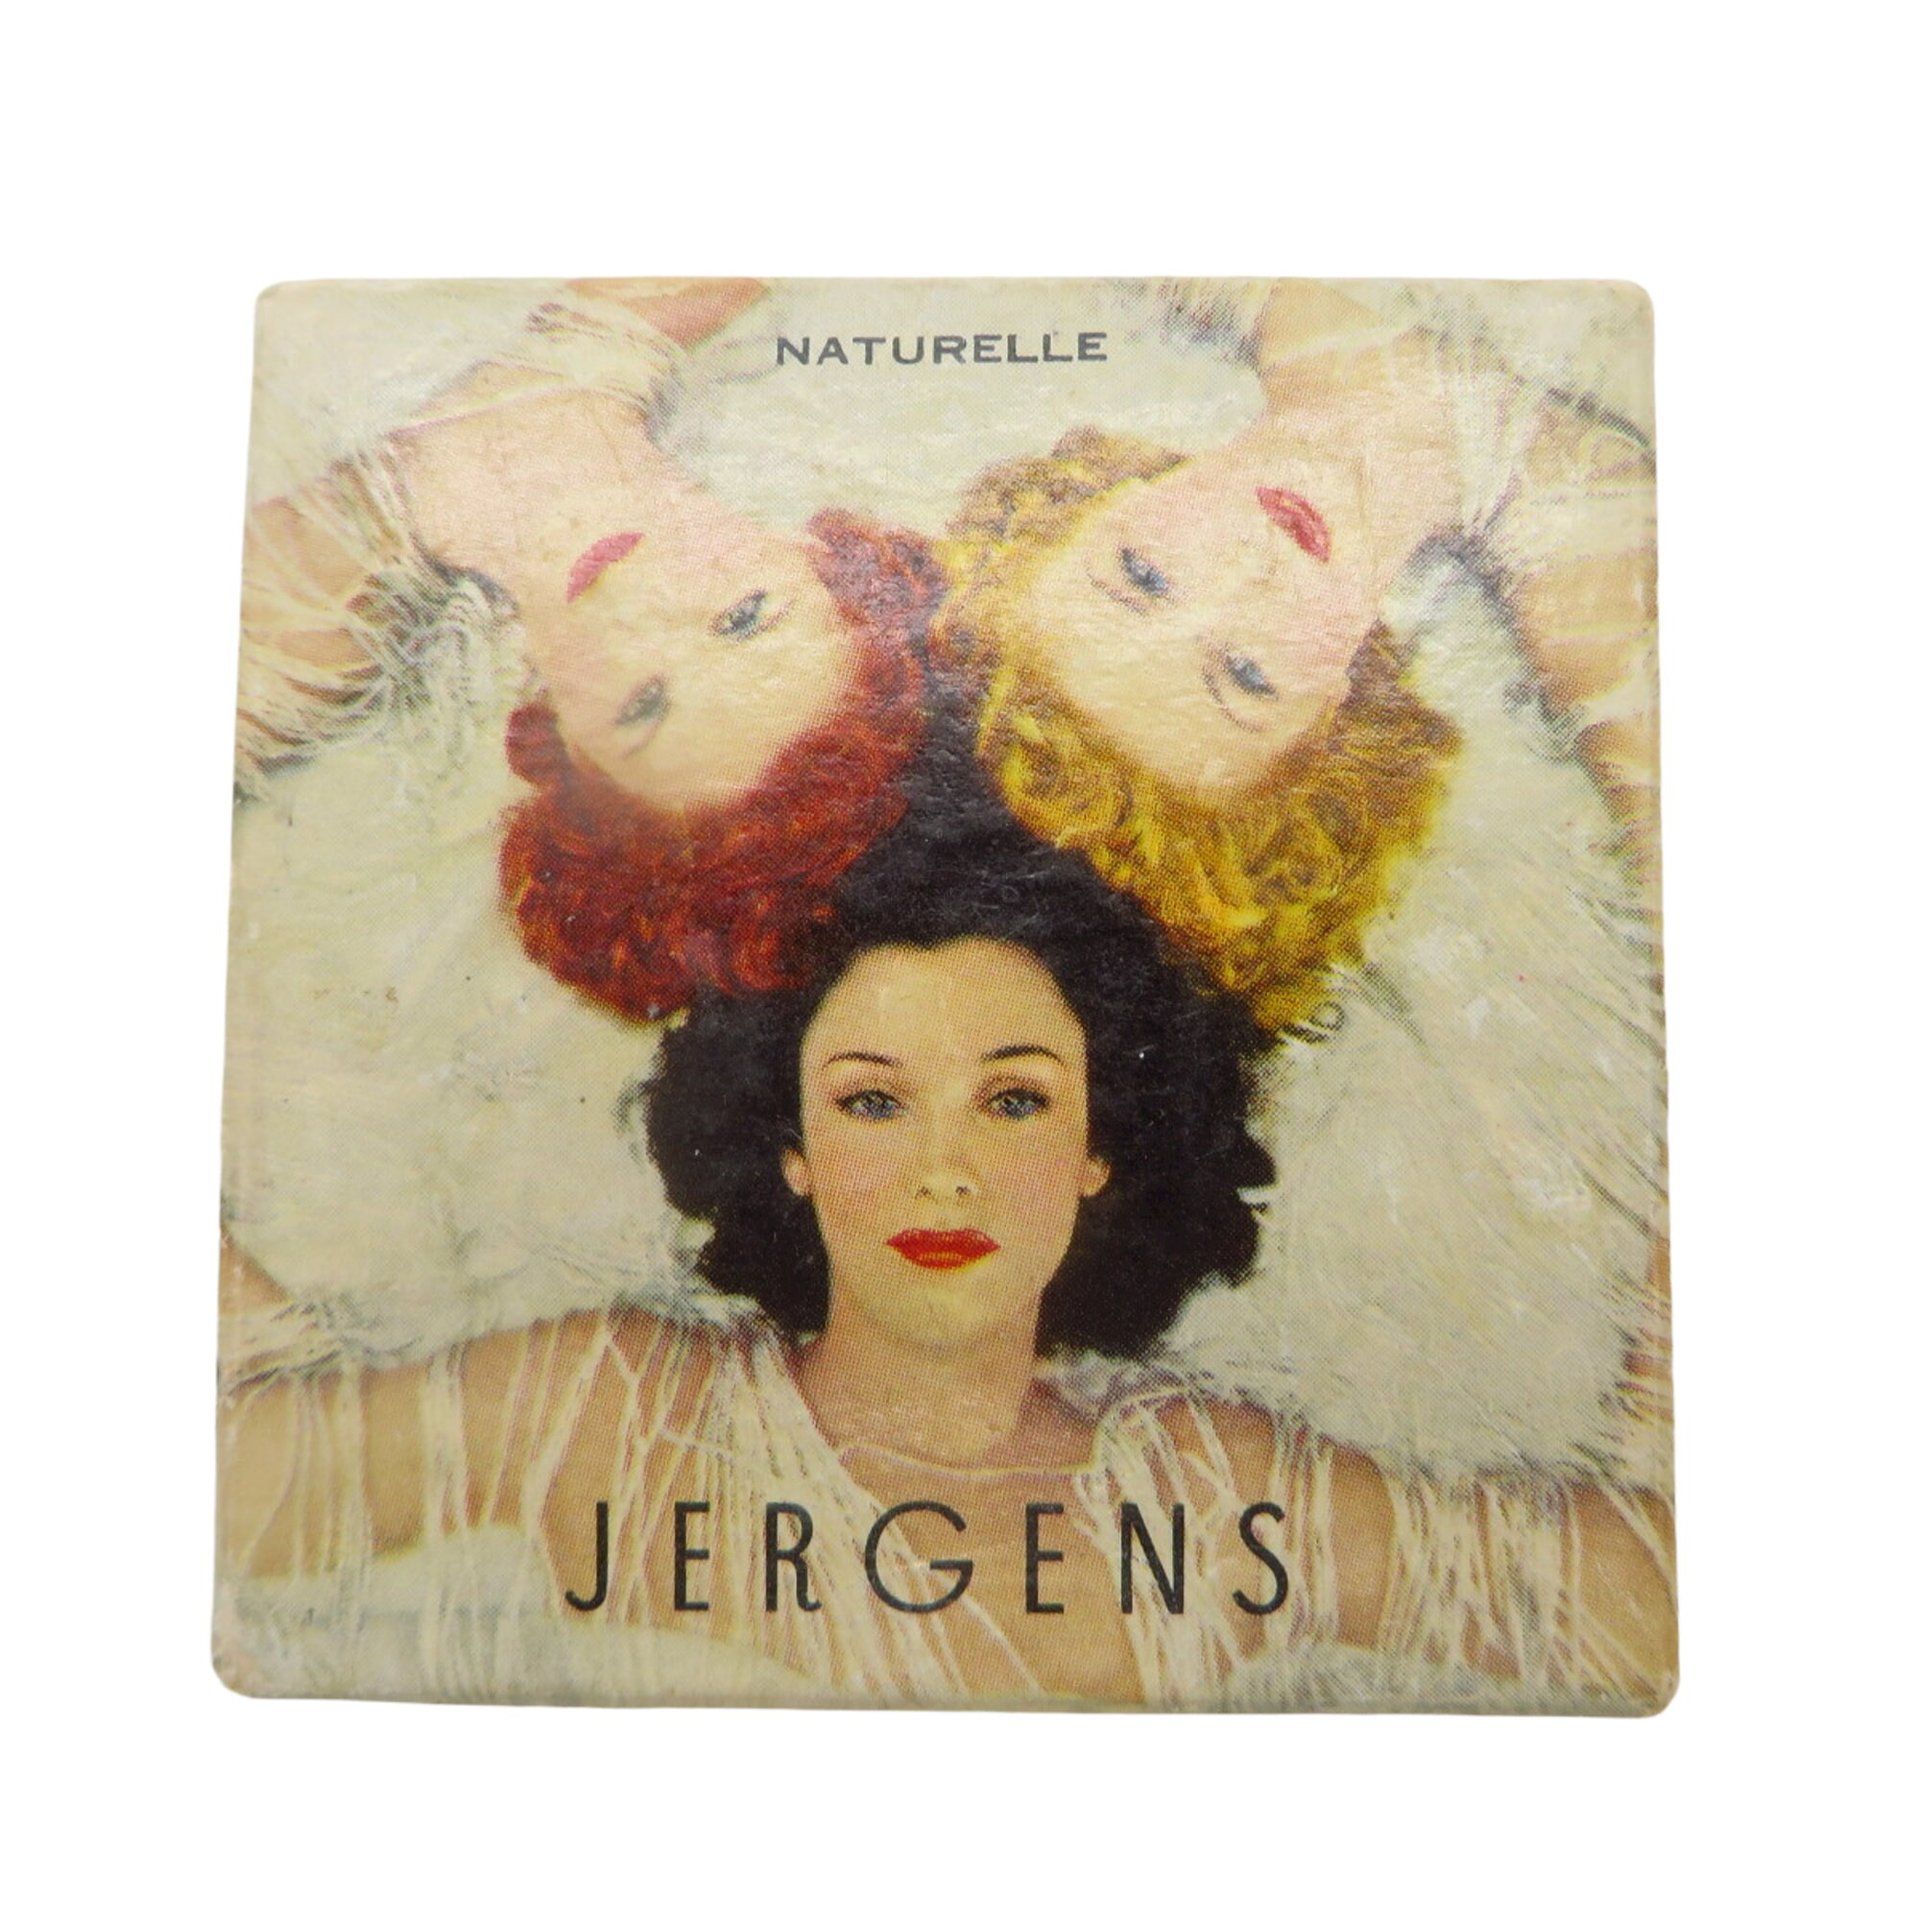 Vintage Jergens “Naturelle” Square Box, Collectible Vanity